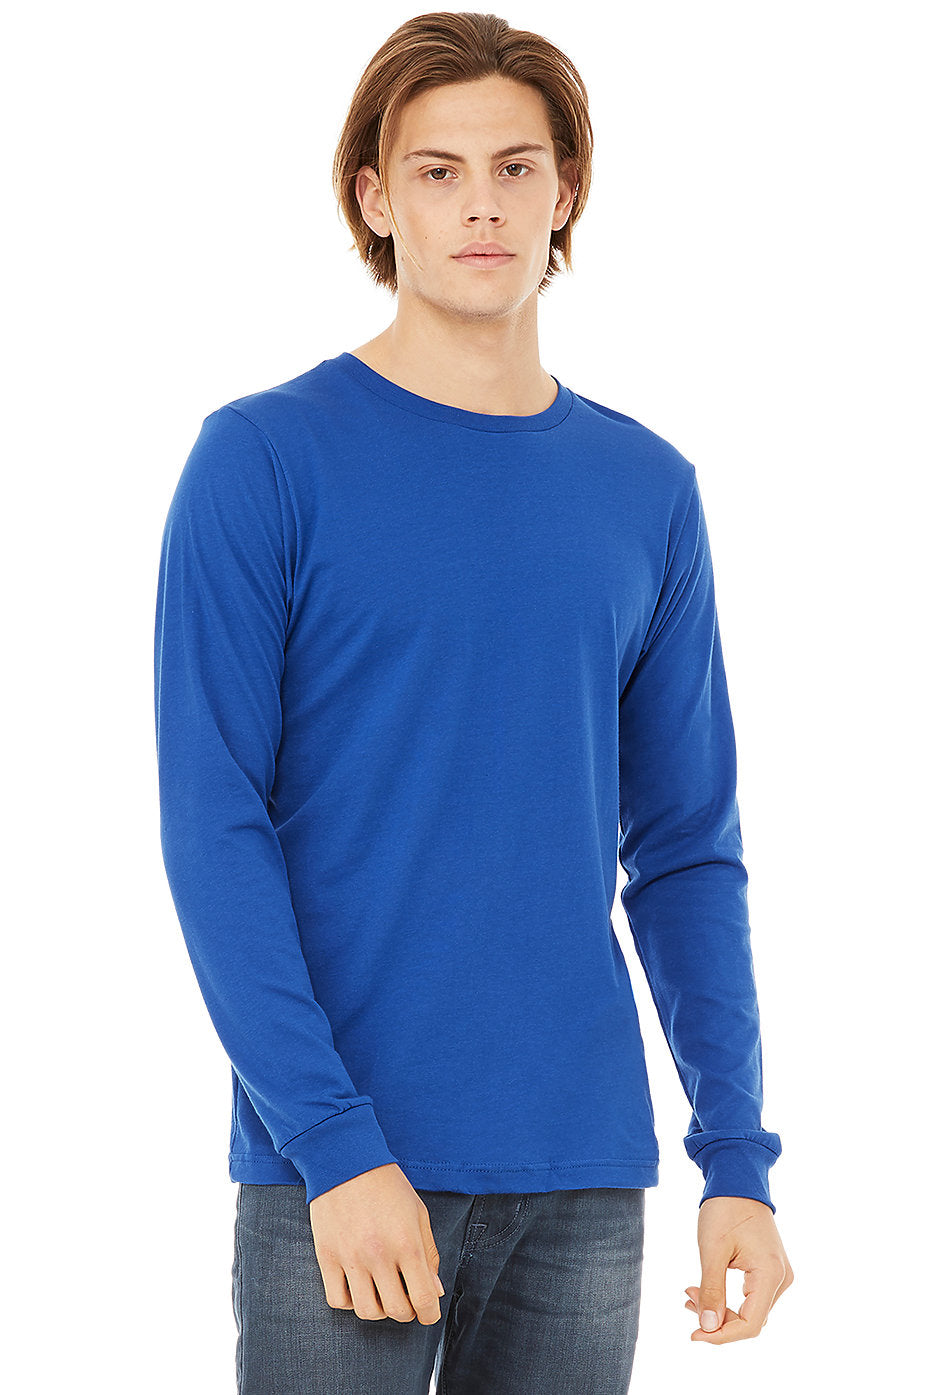 BELLA+CANVAS® Long Sleeve Adult Unisex Jersey T-Shirt